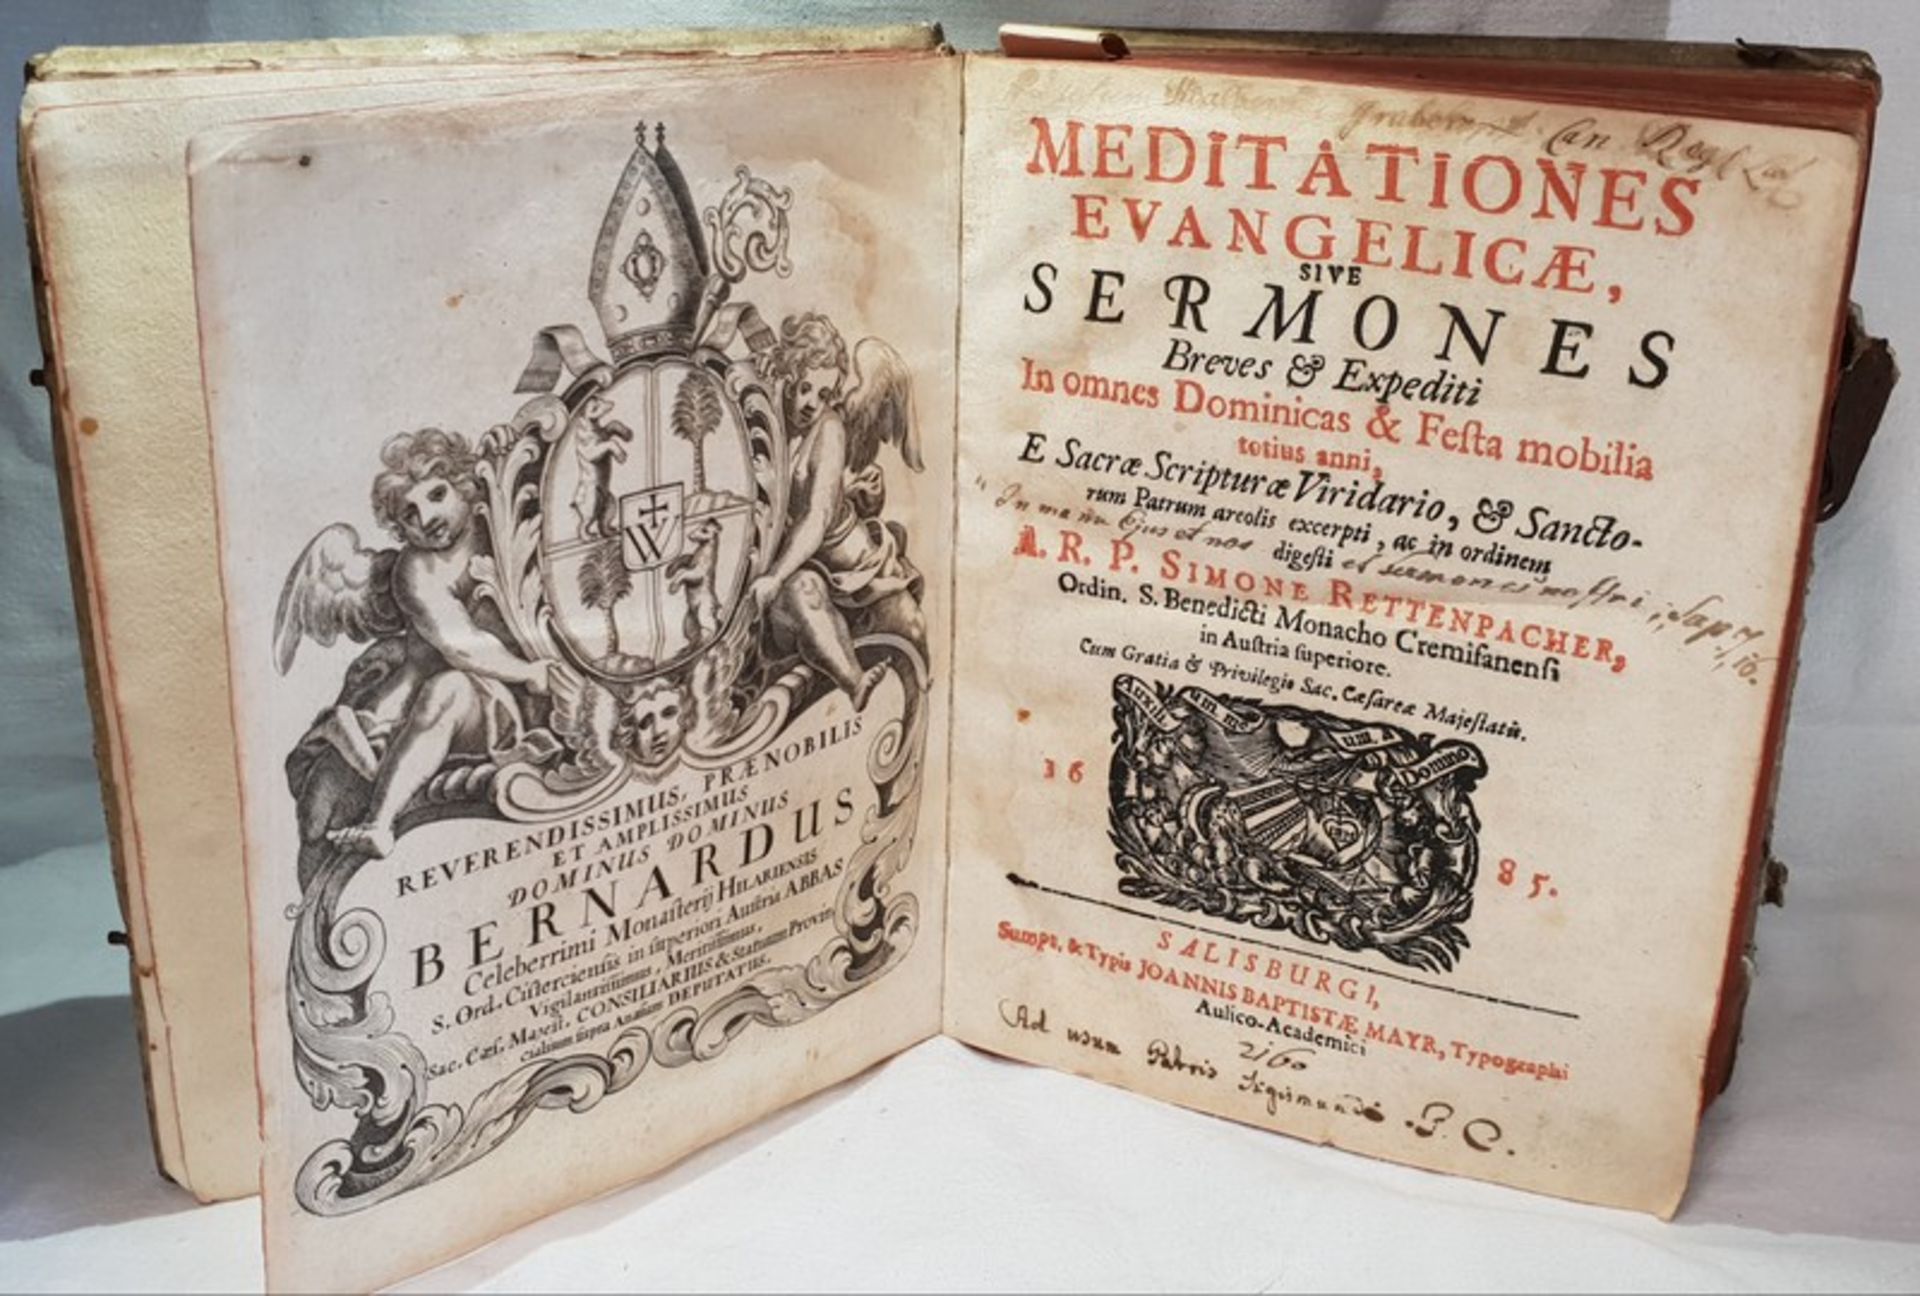 Meditationes Evangelicae sive Sermones... A.R.P. Simone Rettenpacher , Salzburg 1685,